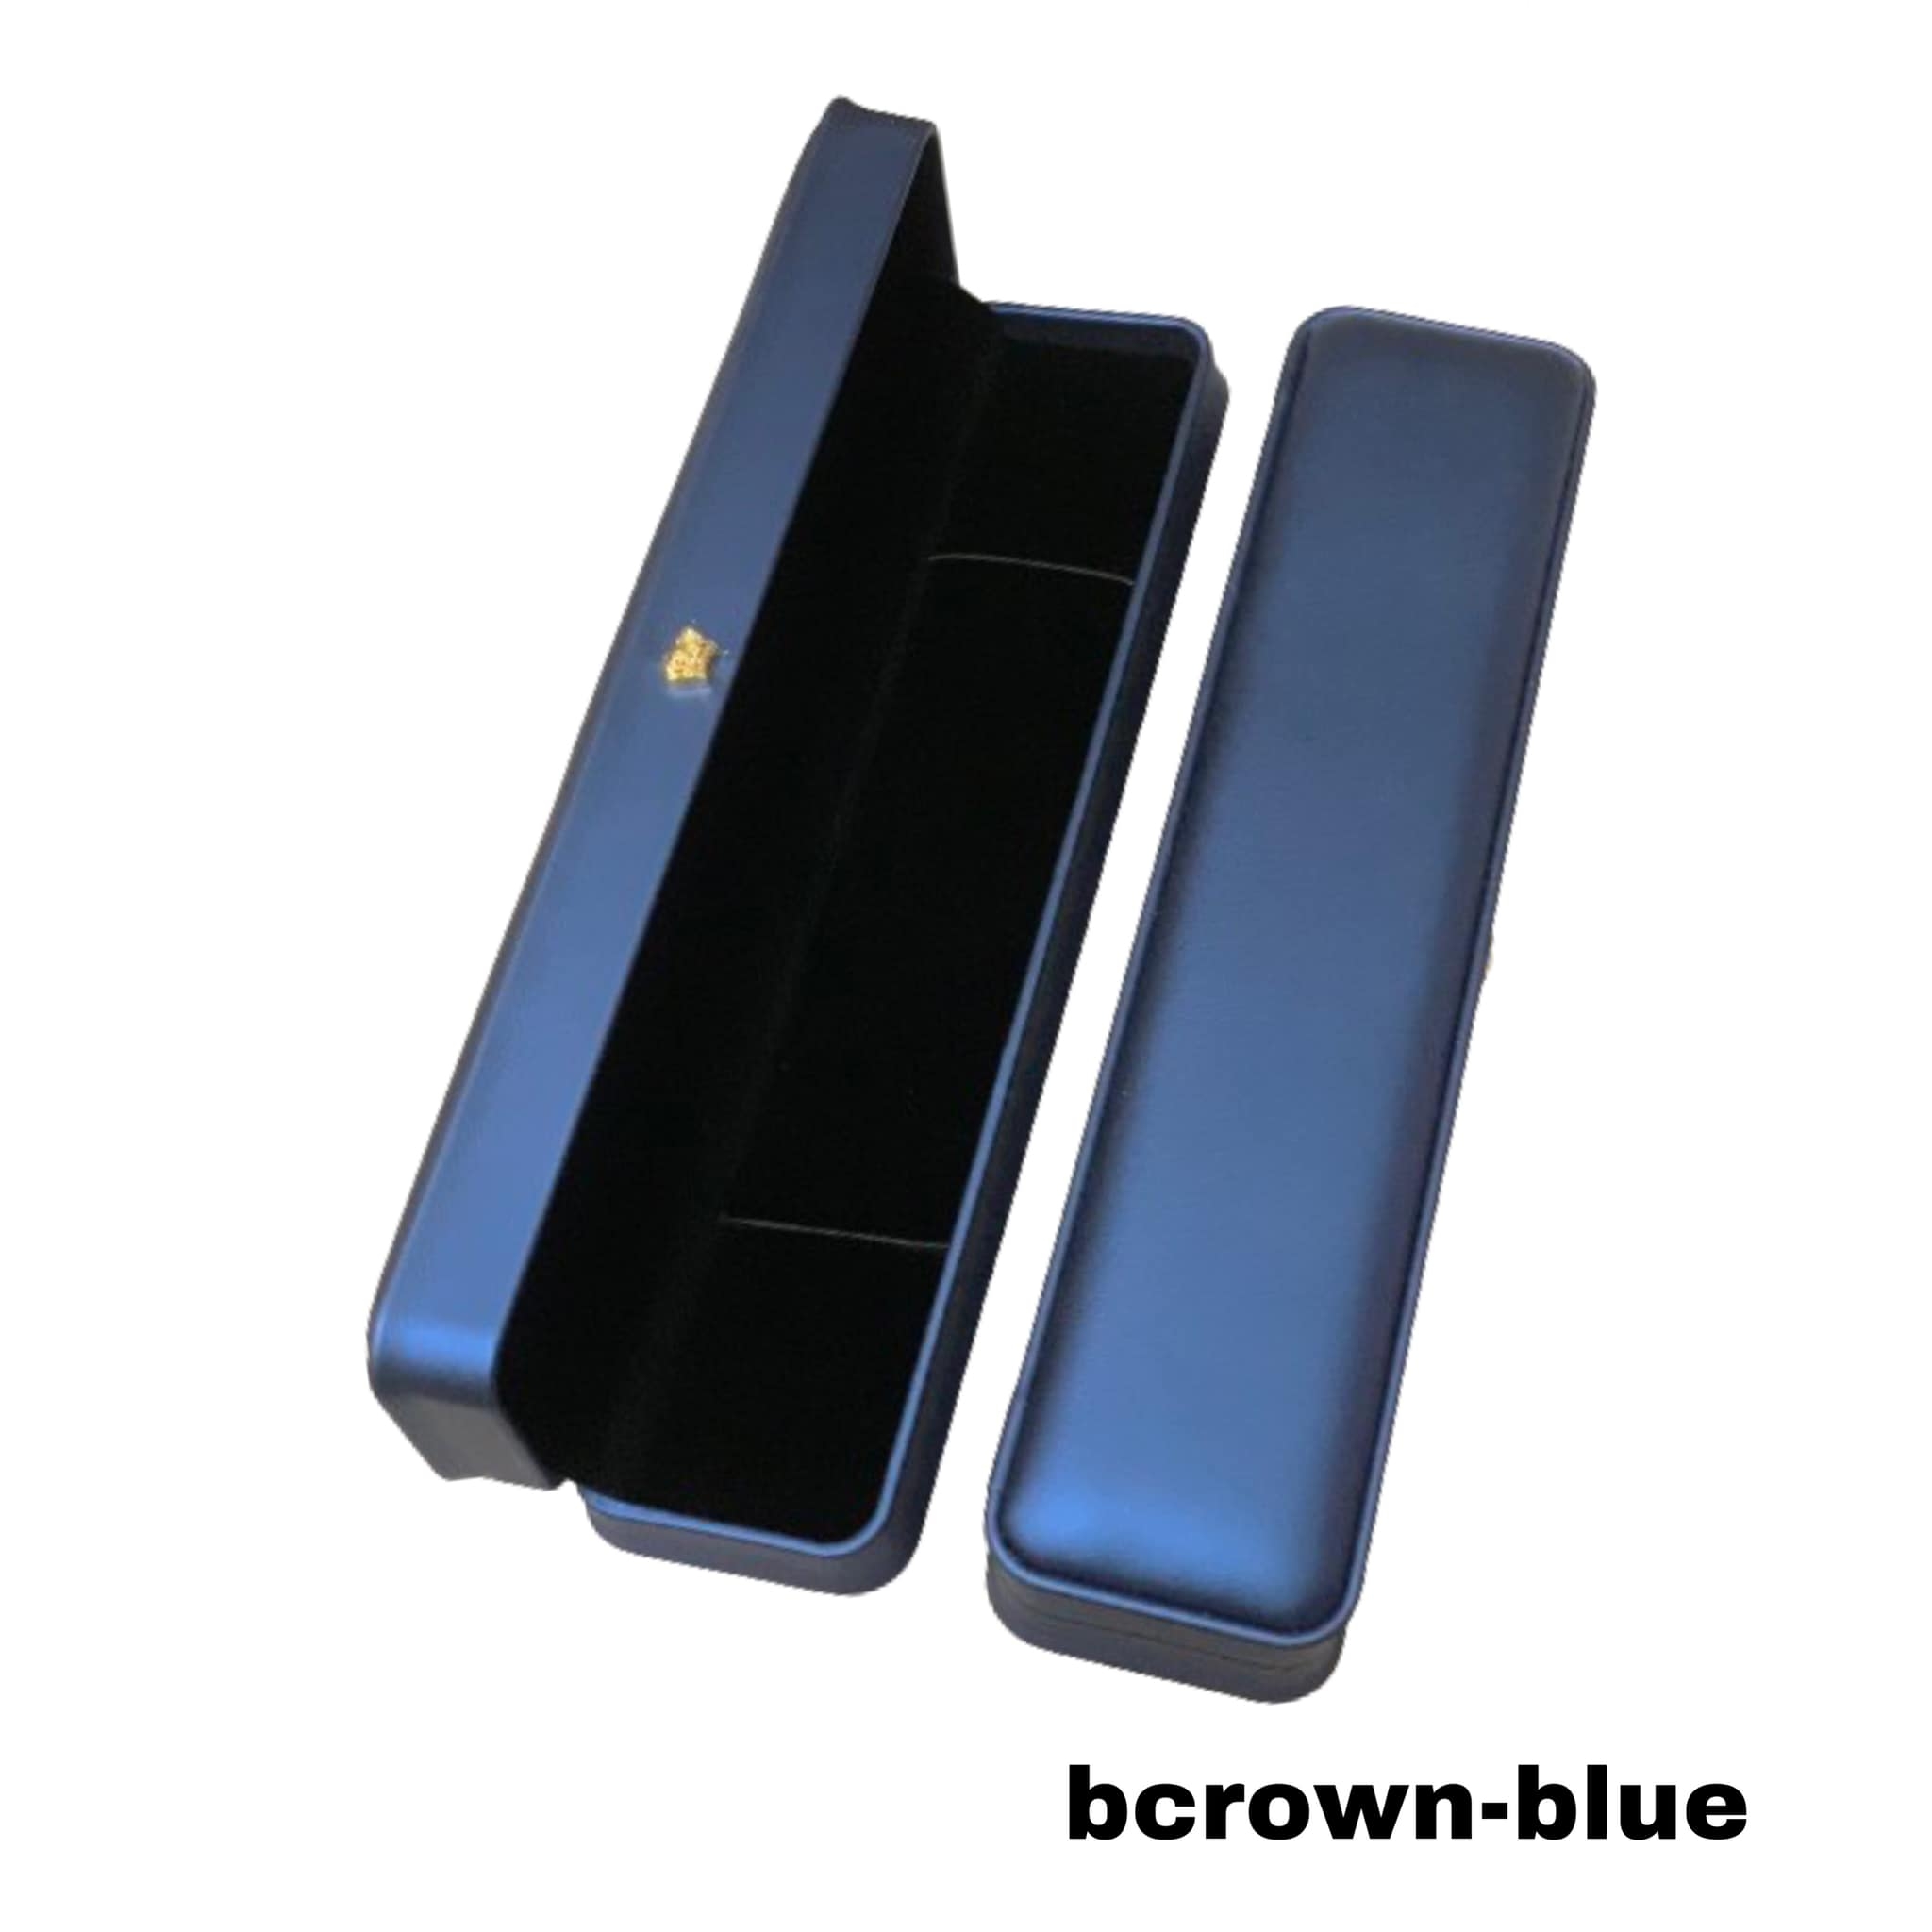 bcrown-blue